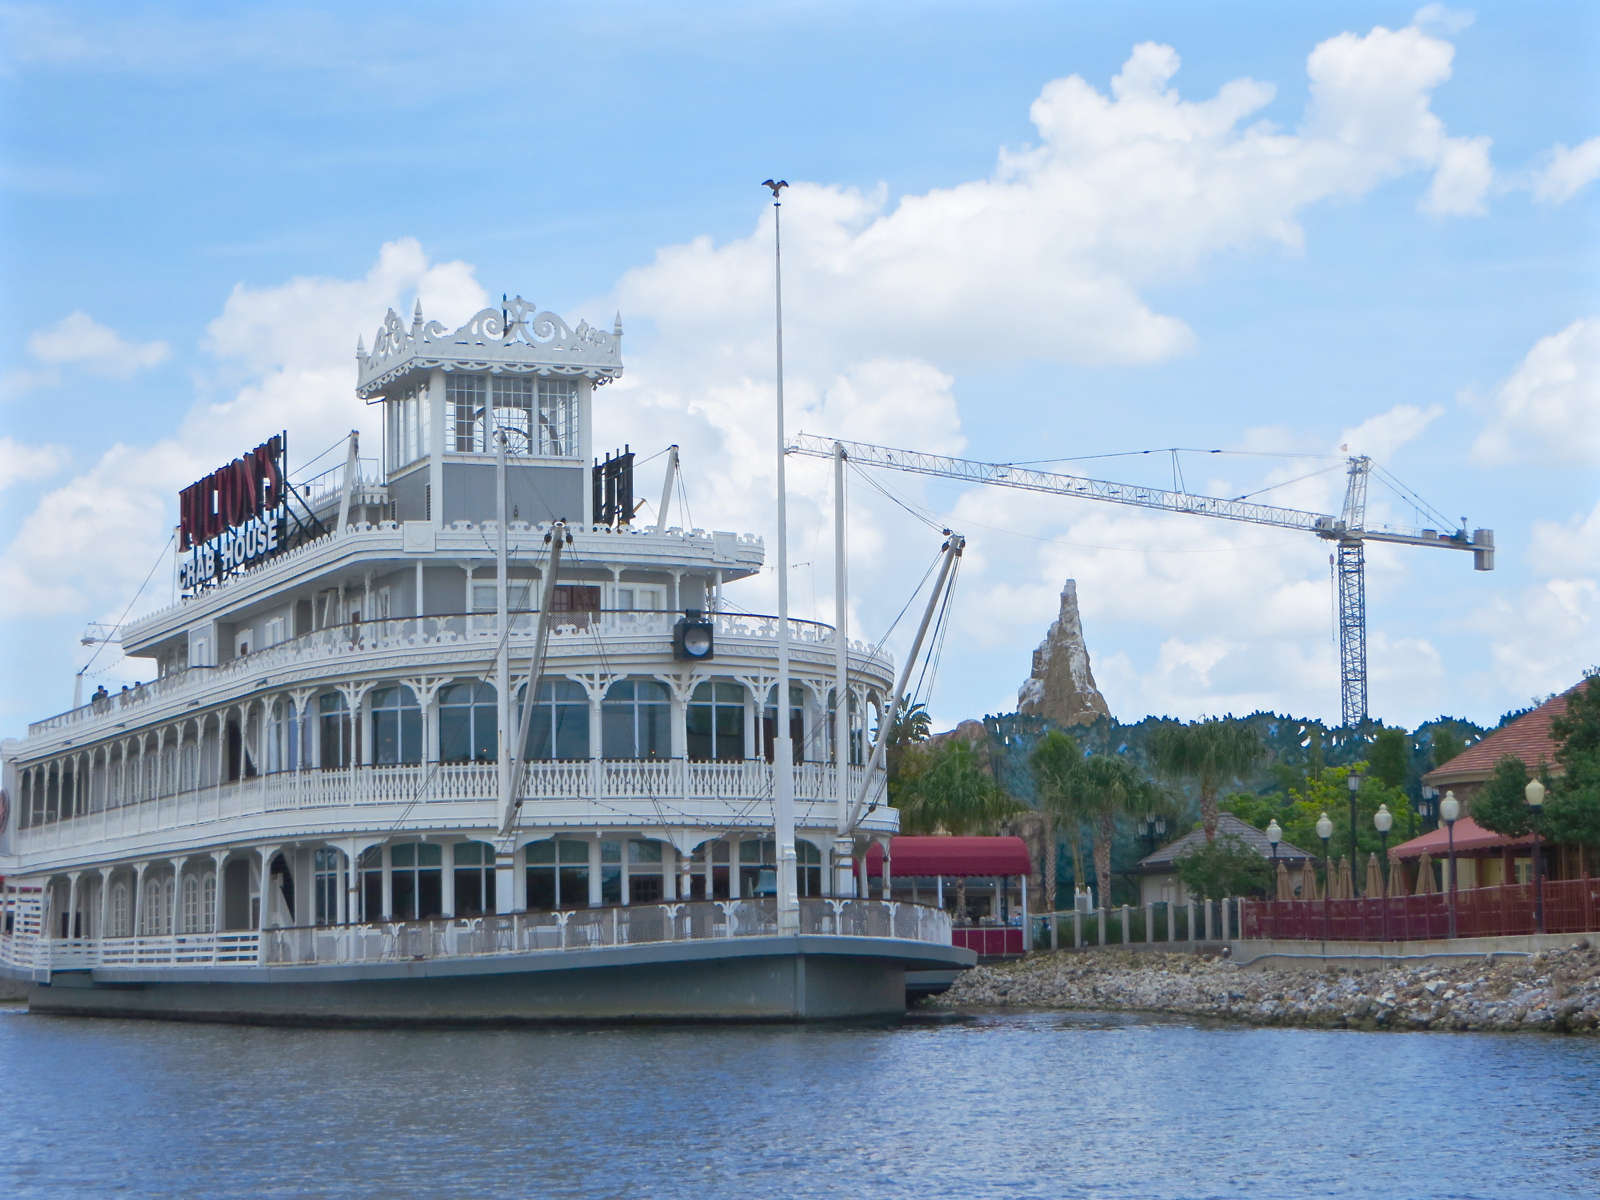 Walt Disney World Resort Update for July 28 - August 3, 2015